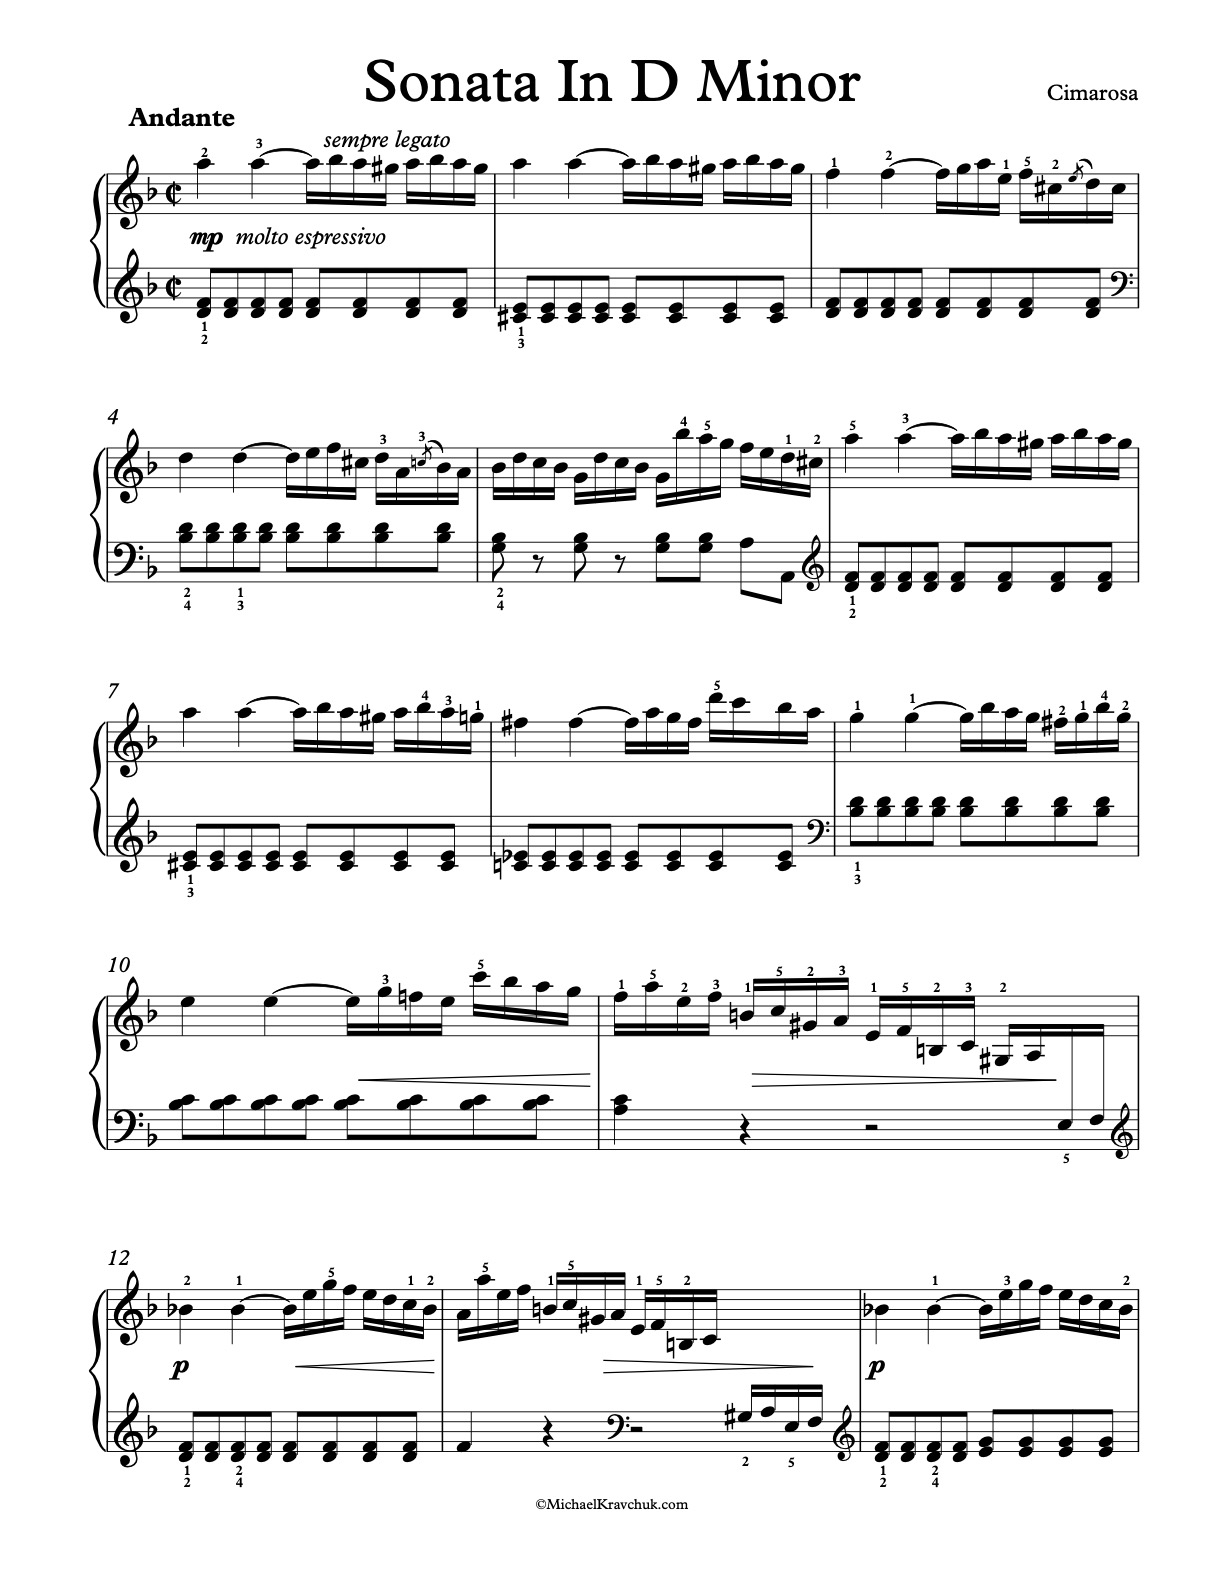 Sonata in D Minor Piano Sheet Music